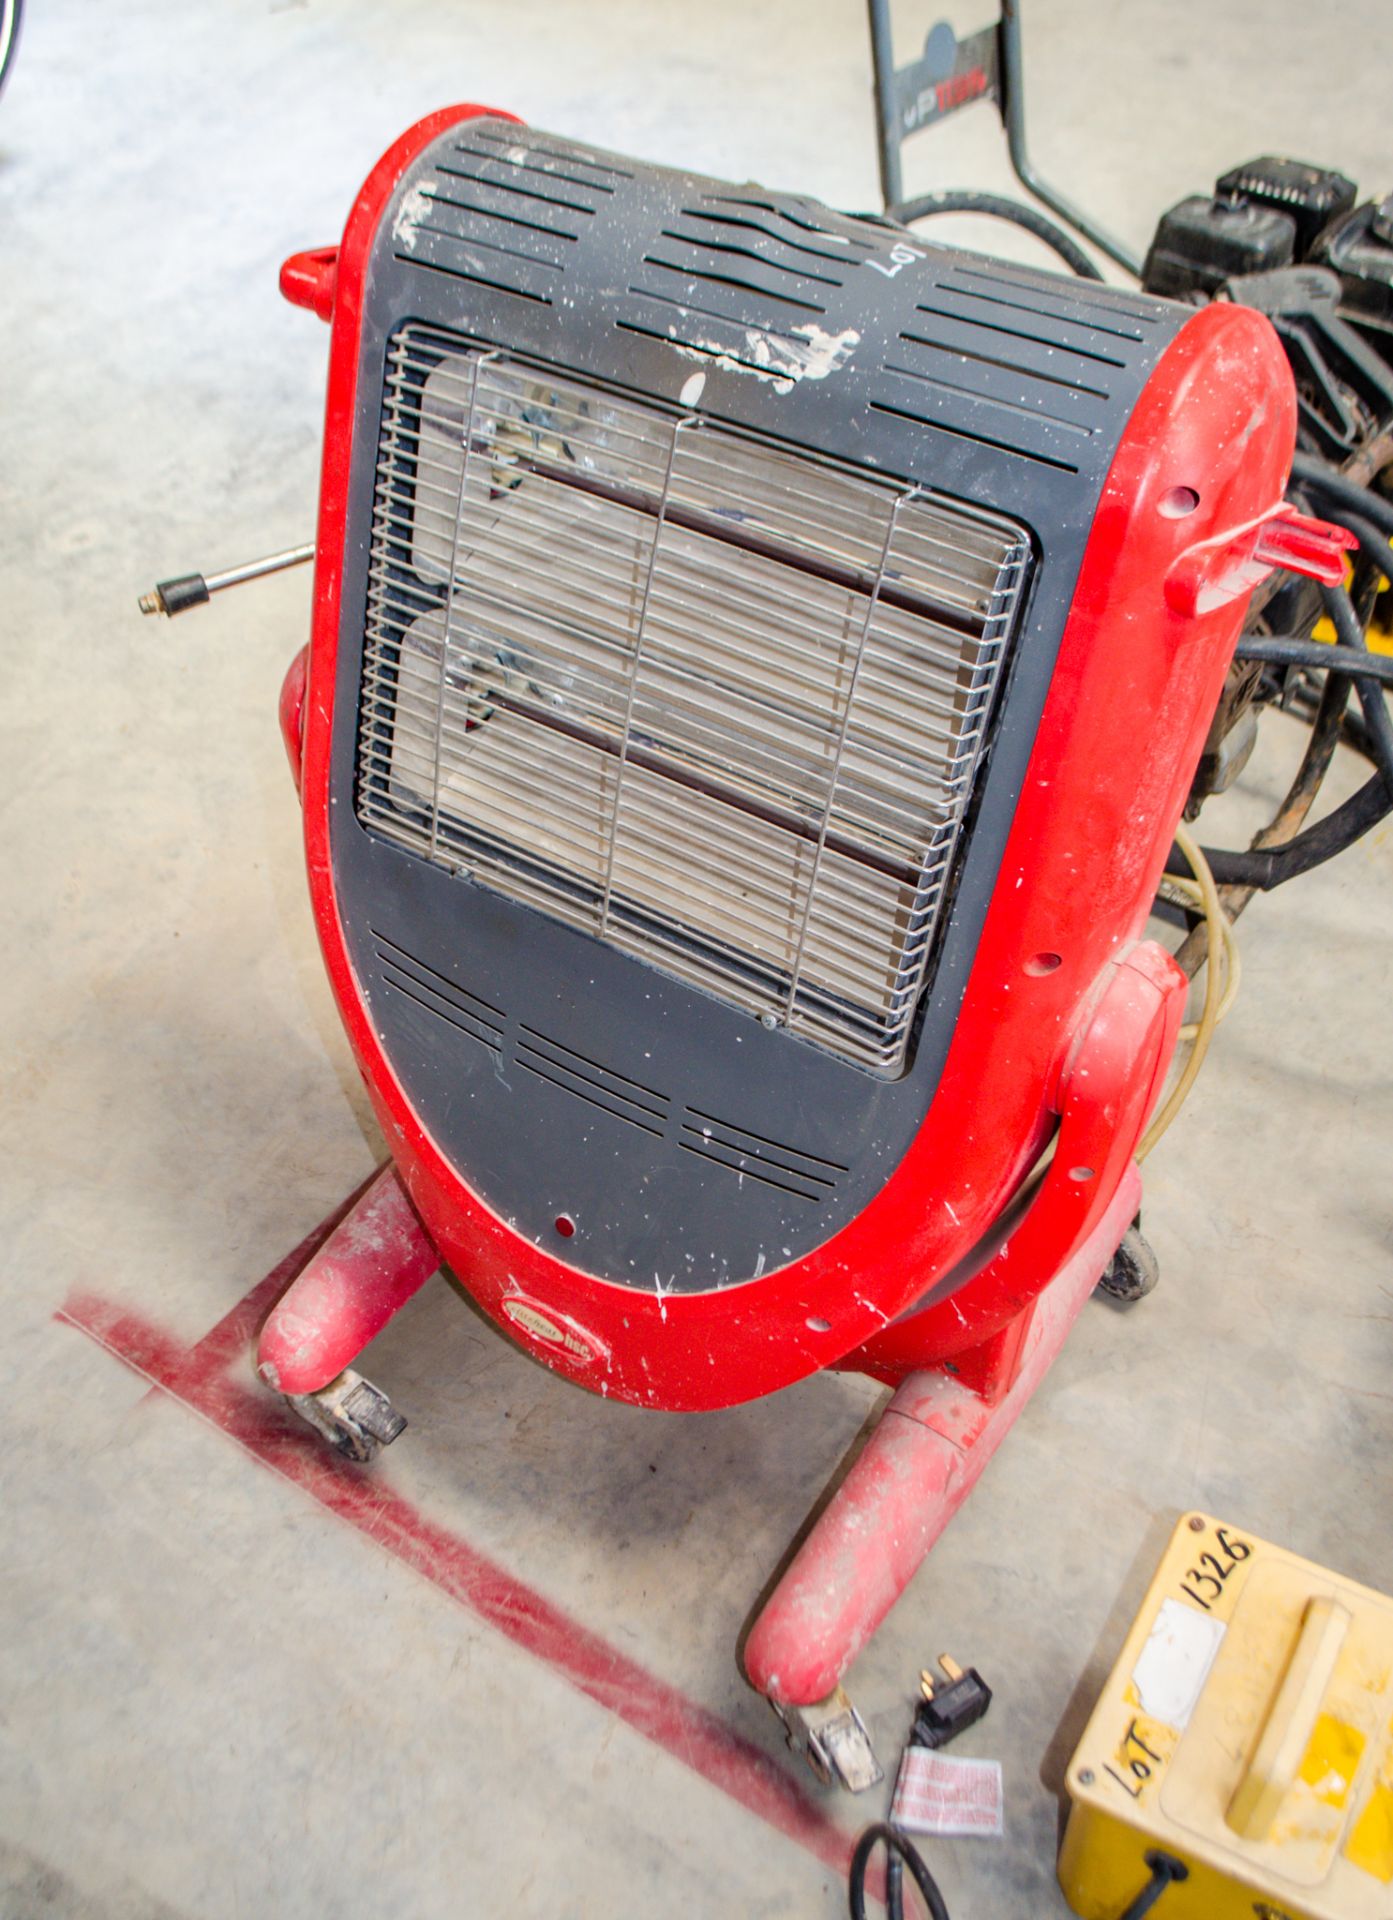 Elite Heat 110v infrared heater A766316